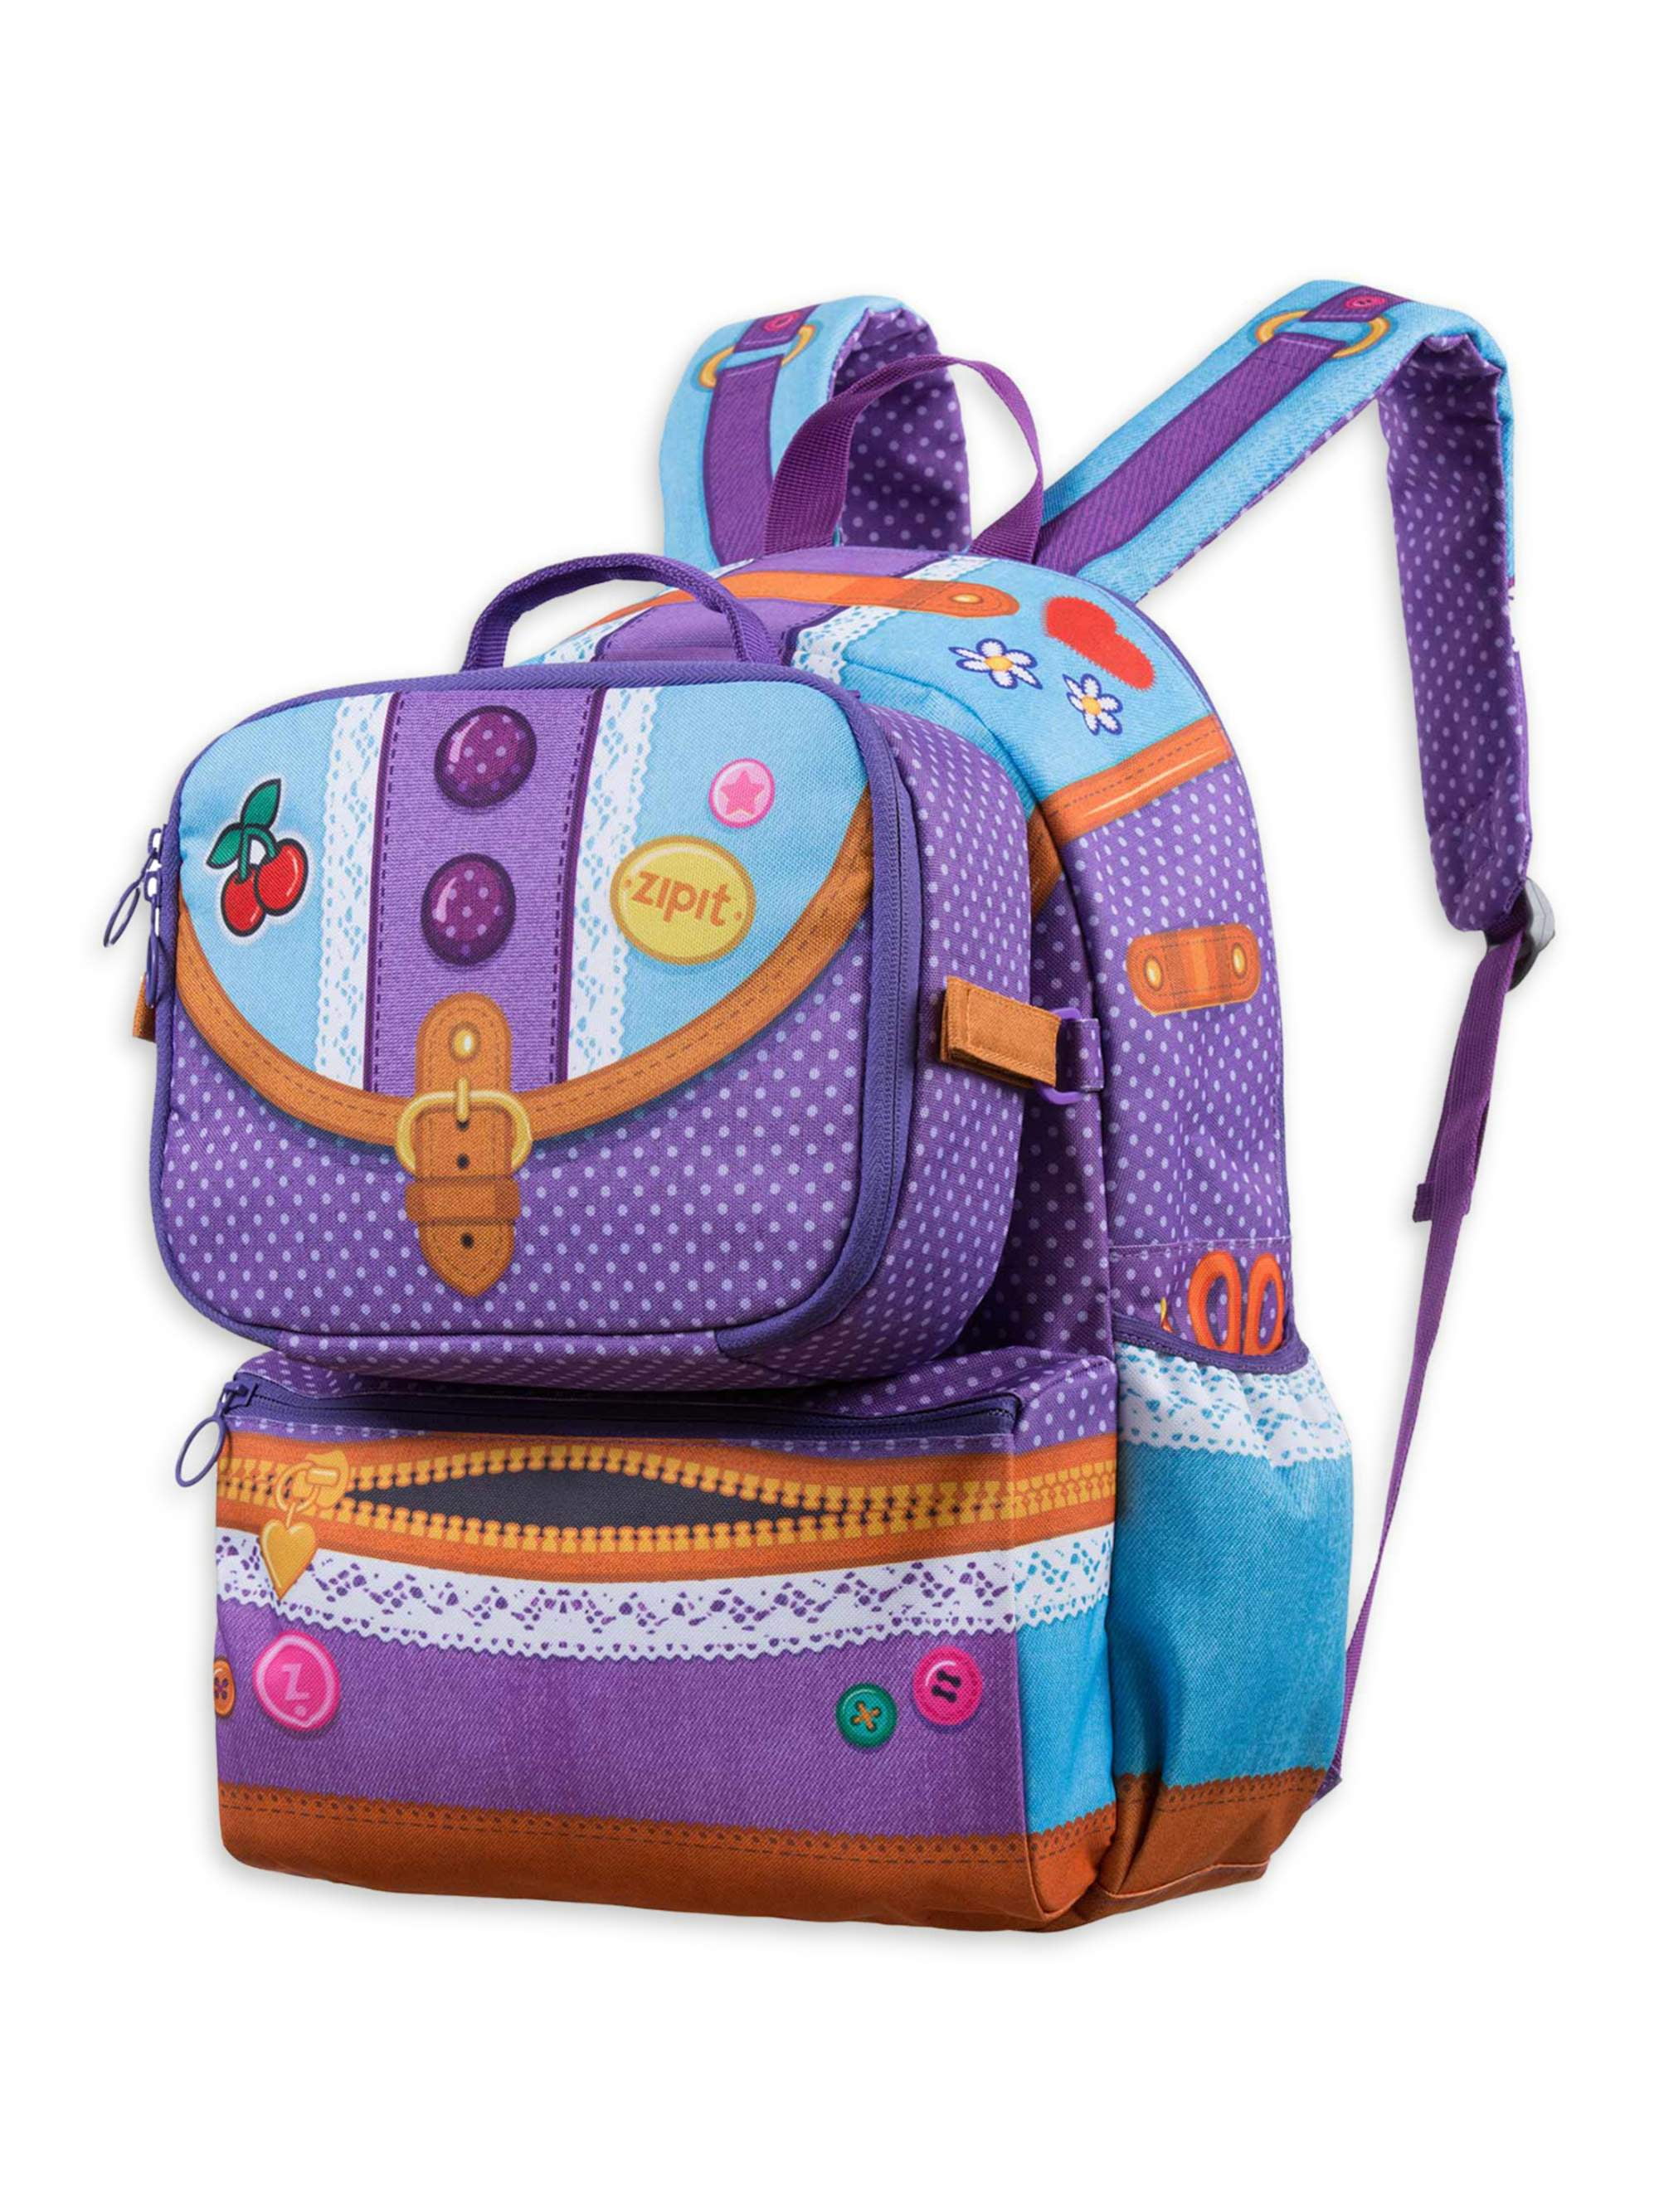 ZIPIT Lunch Bag for Boys, Cute Book Bag for Sturdy & Lightweight (Purple) - Walmart.com